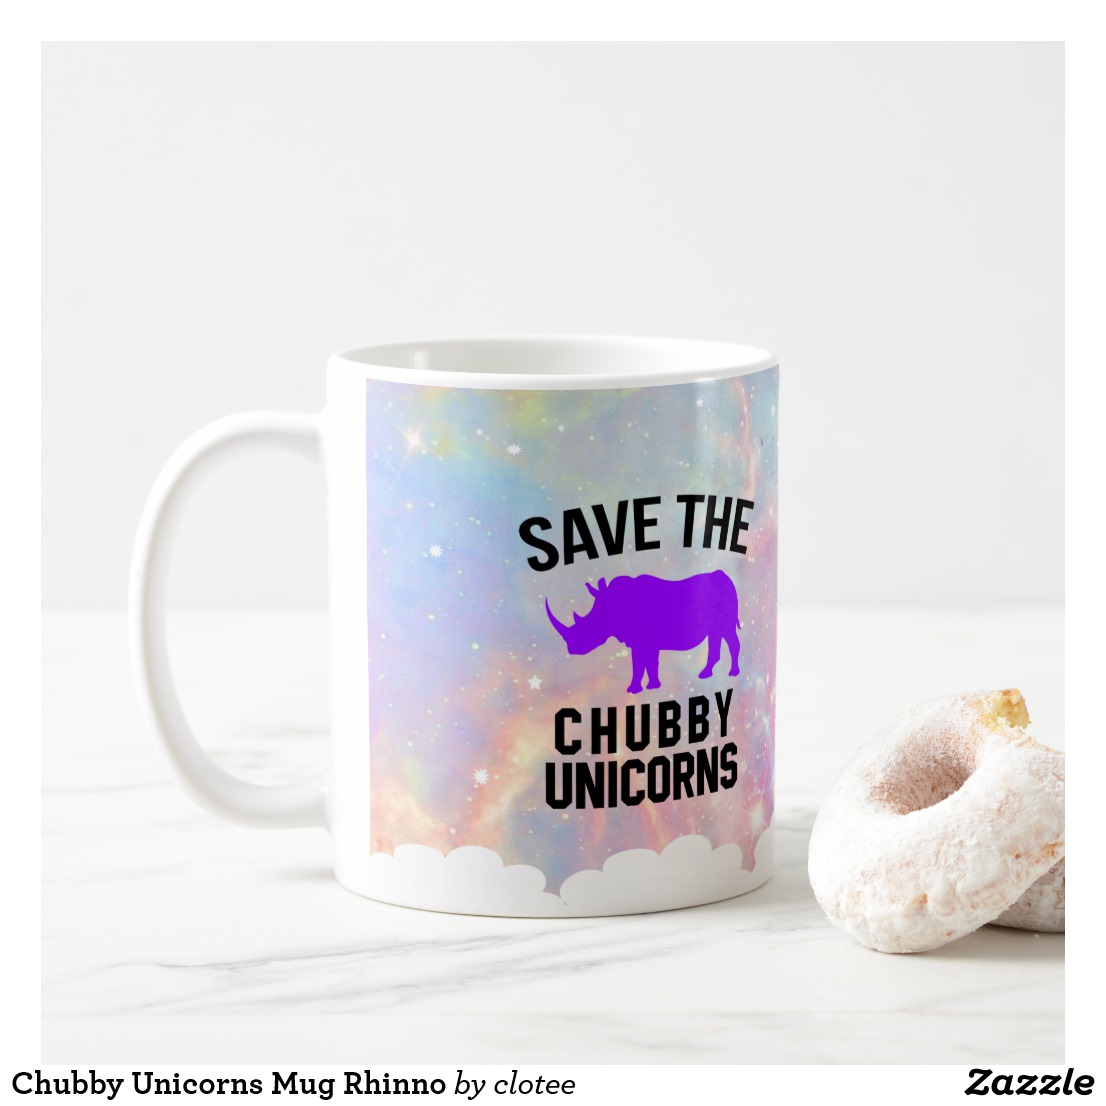 Chubby Unicorns Mug